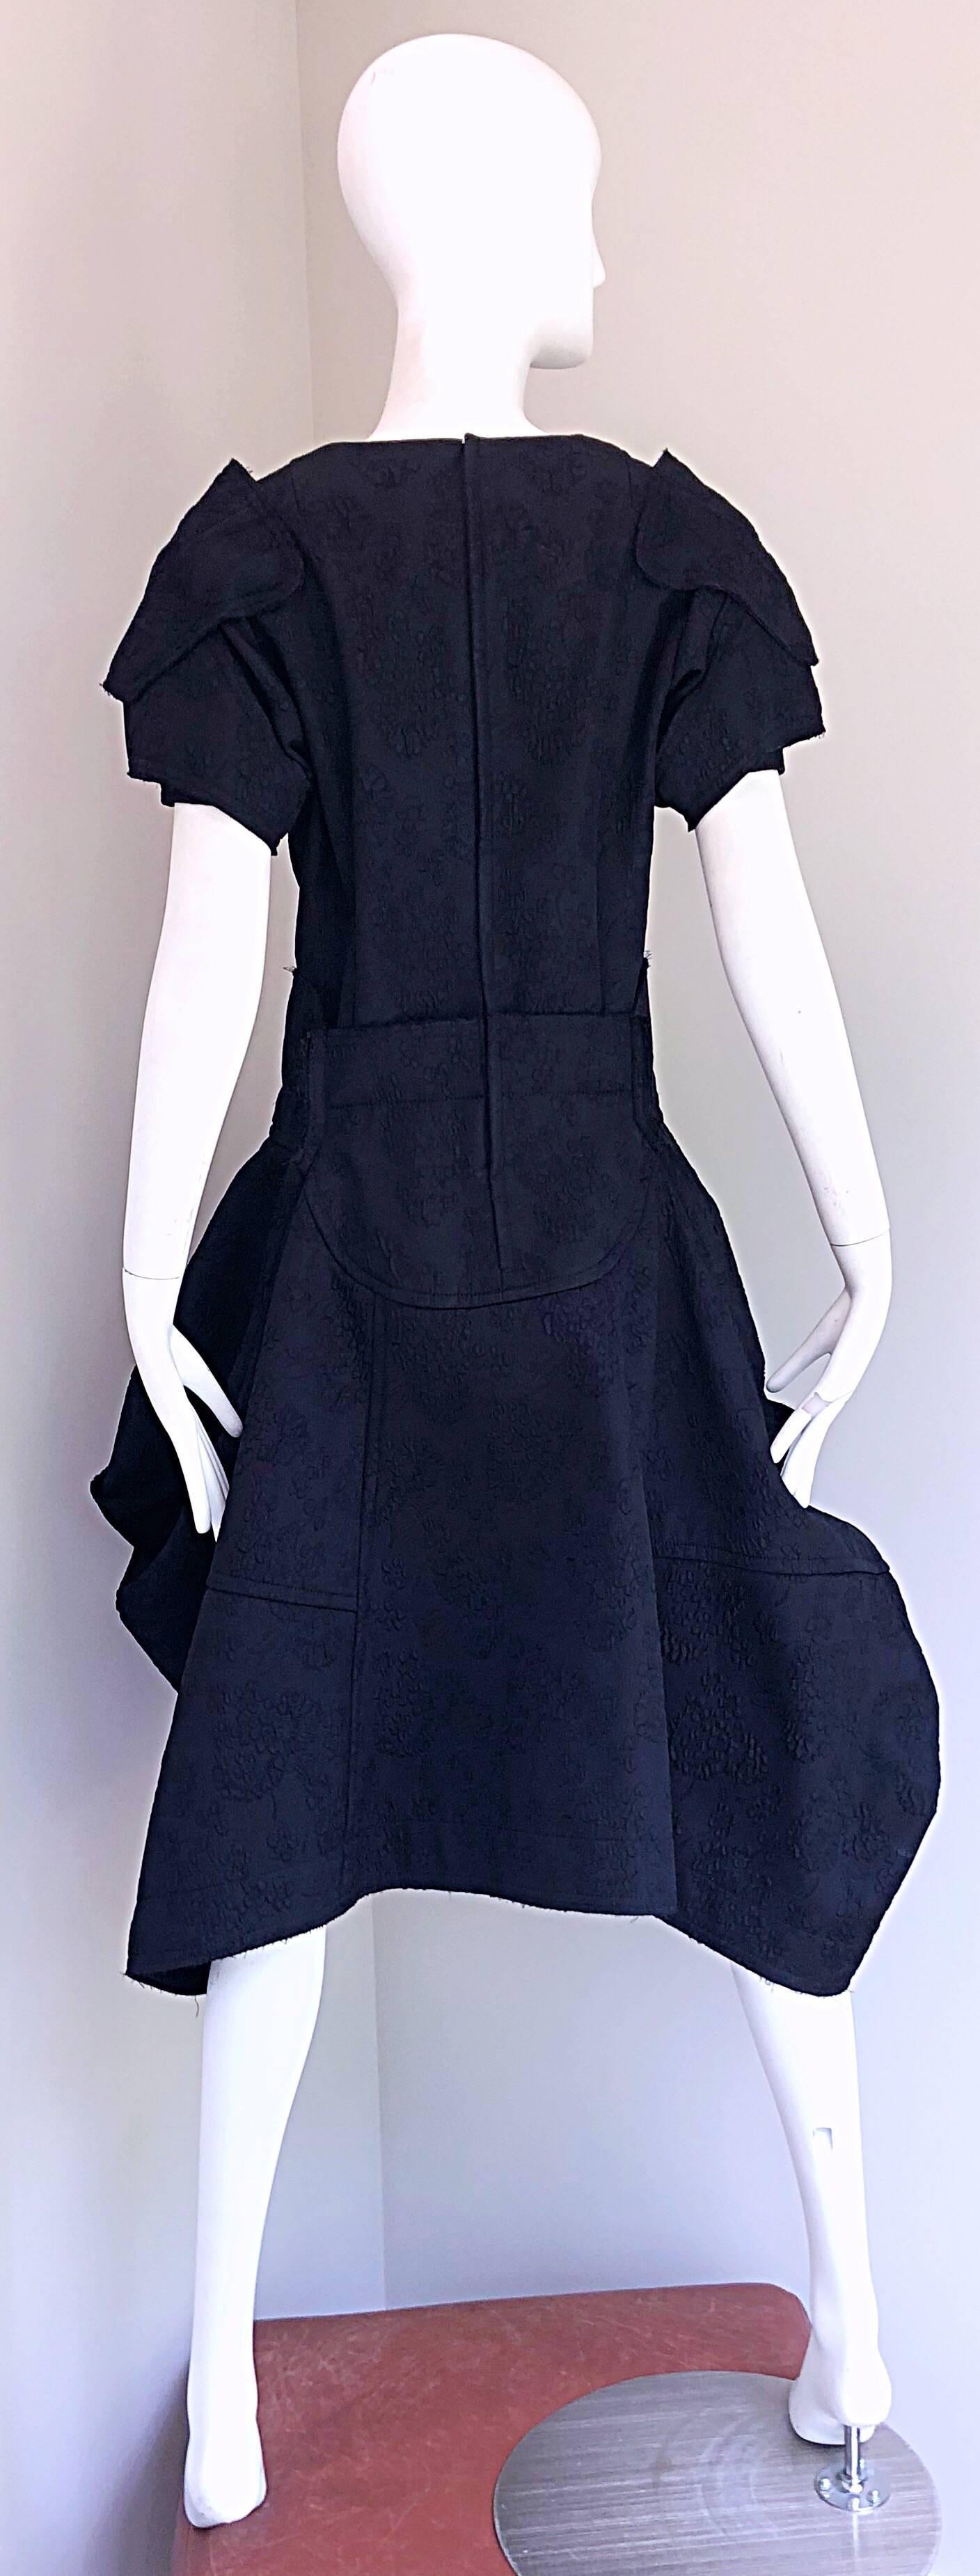 Comme Des Garcons Samurai 2016 Collection Black Avant Garde Collectible Dress 8